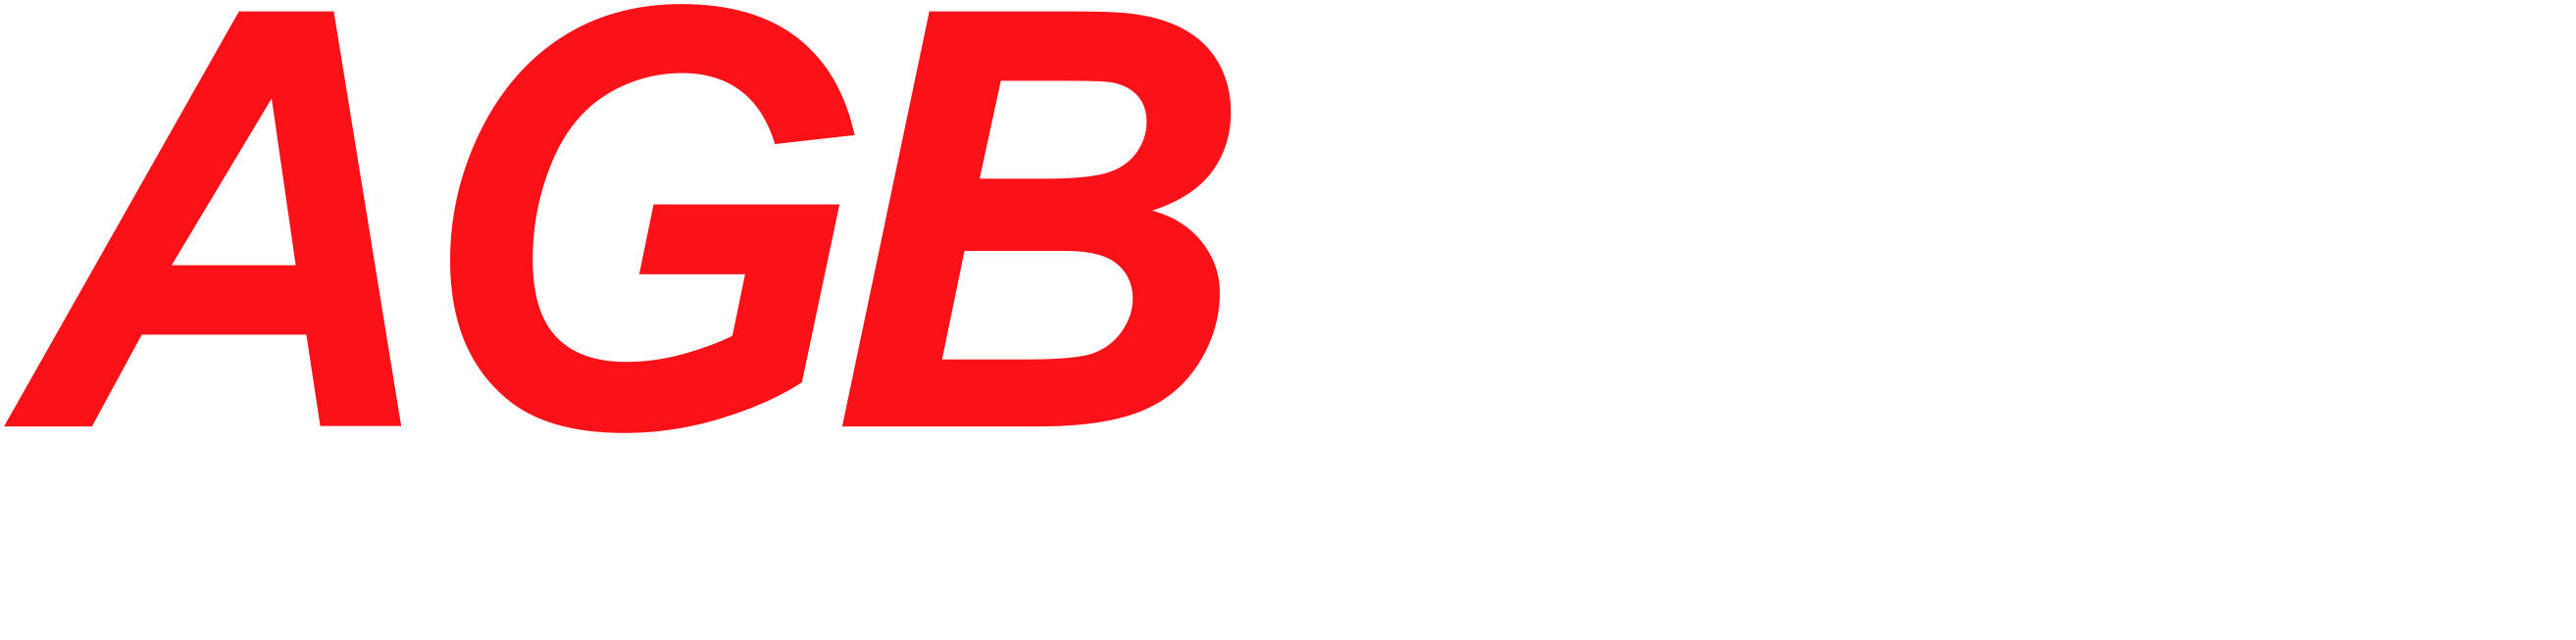 AGB Scaffolding Services Ltd